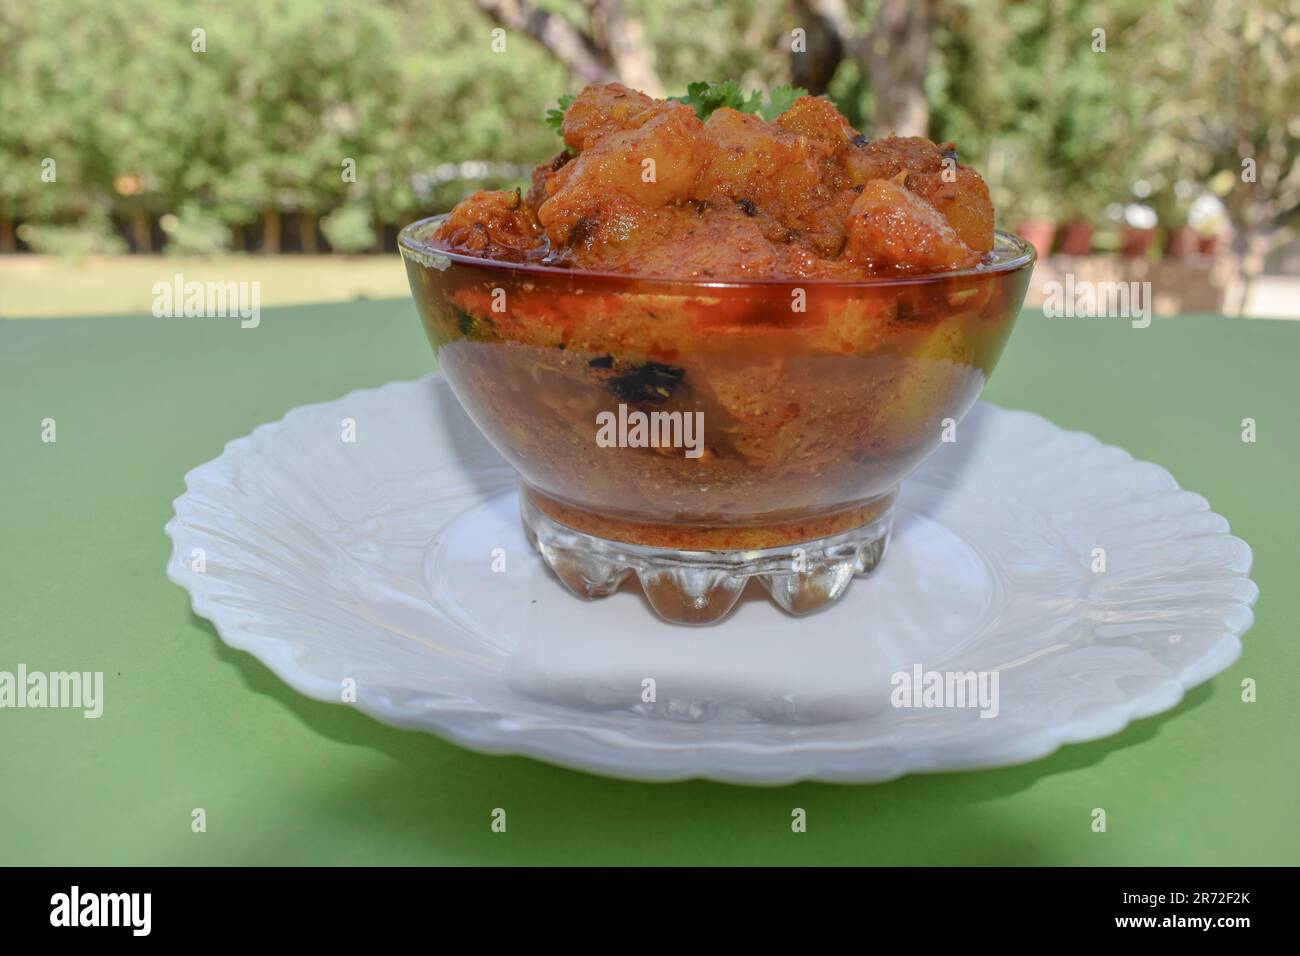 Delicious Spicy Potato curry side dish known as Aloo ki sabji, Indian ...